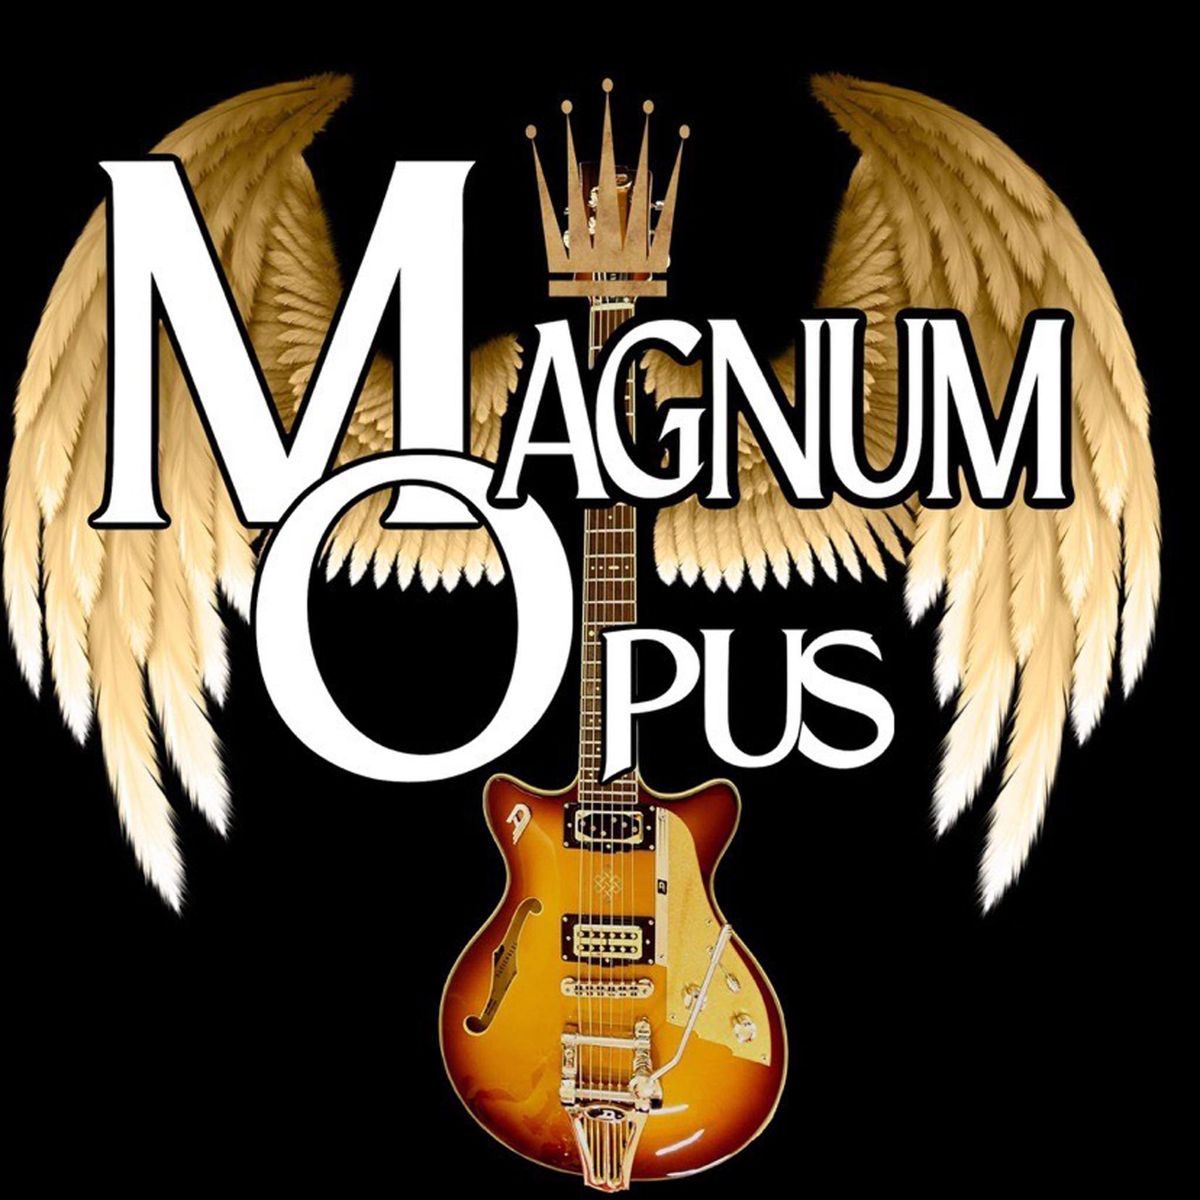 Saturday, 9\/21 - Magnum Opus at Ukulele Brand's - Land O Lakes - 7:30pm-10:30pm